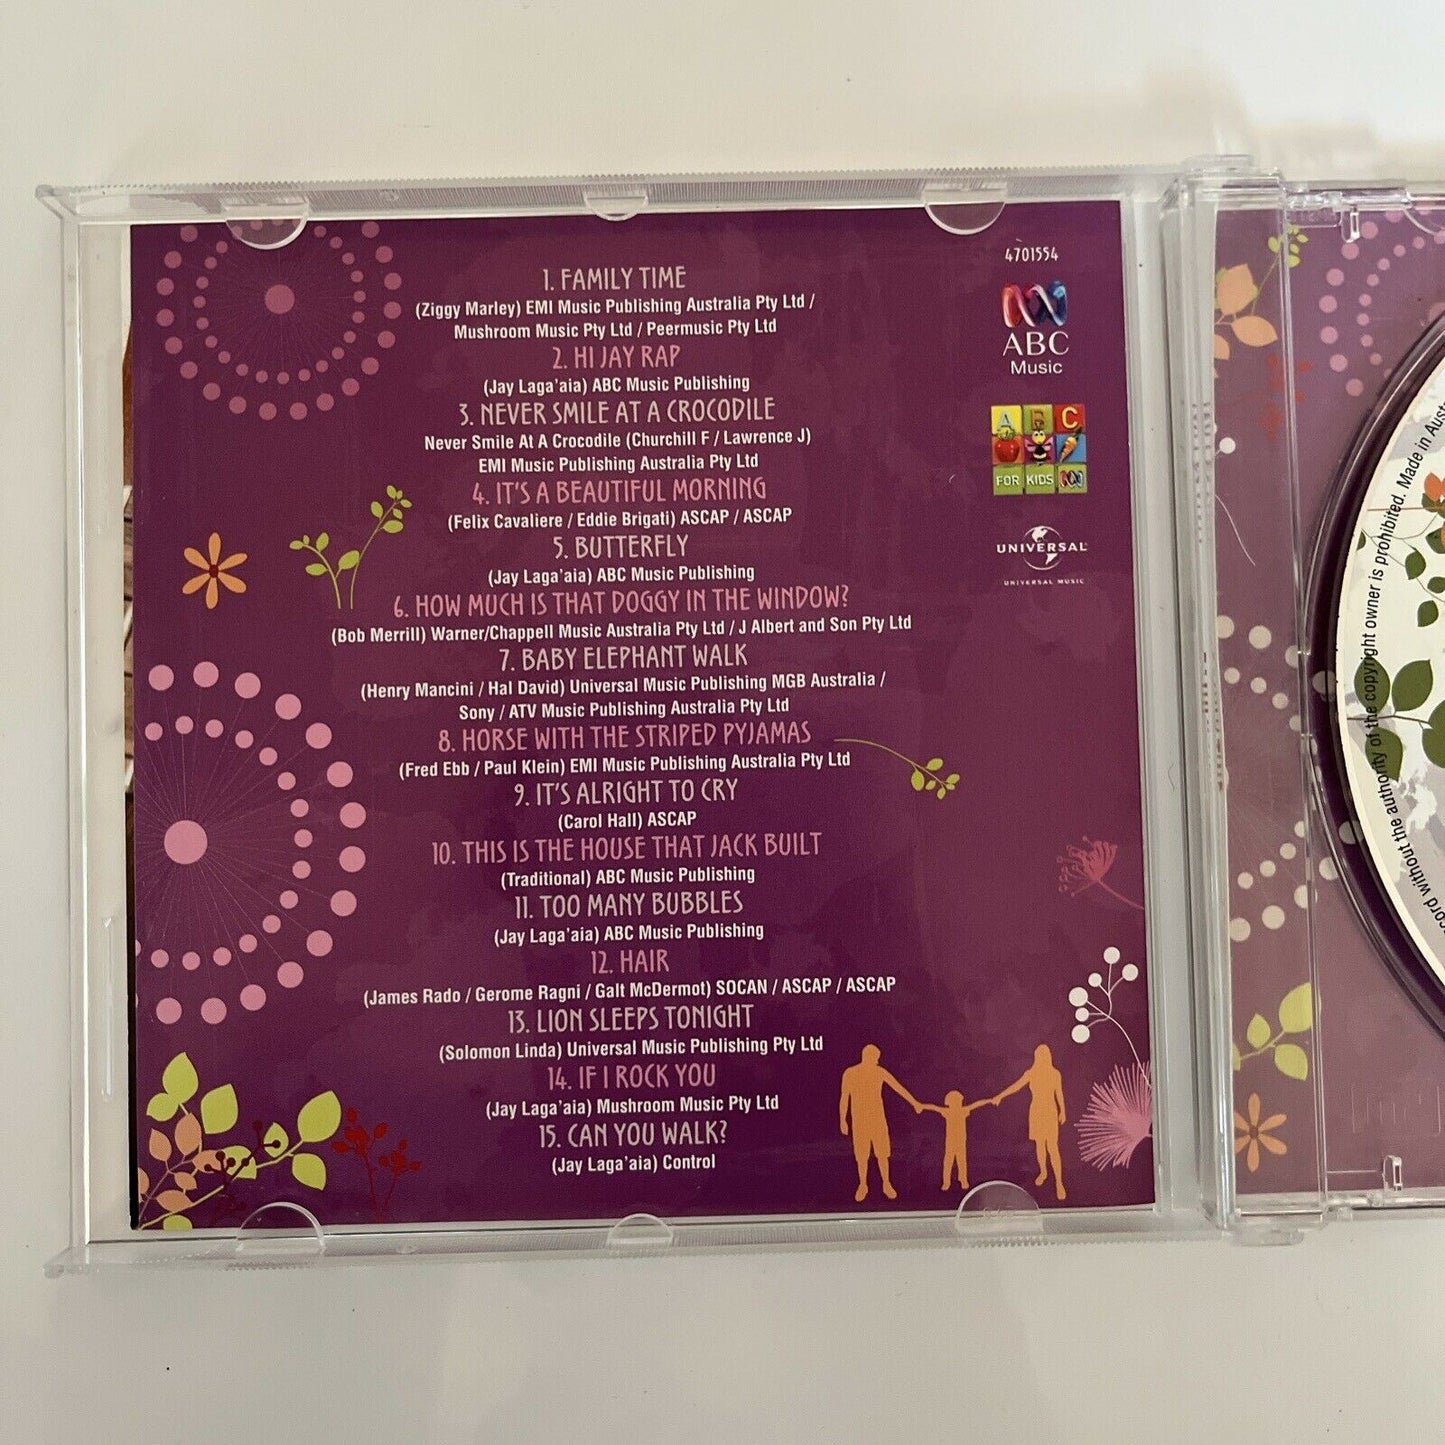 Jay Laga'Aia - Family Time (CD, 2014) Play School ABC for Music